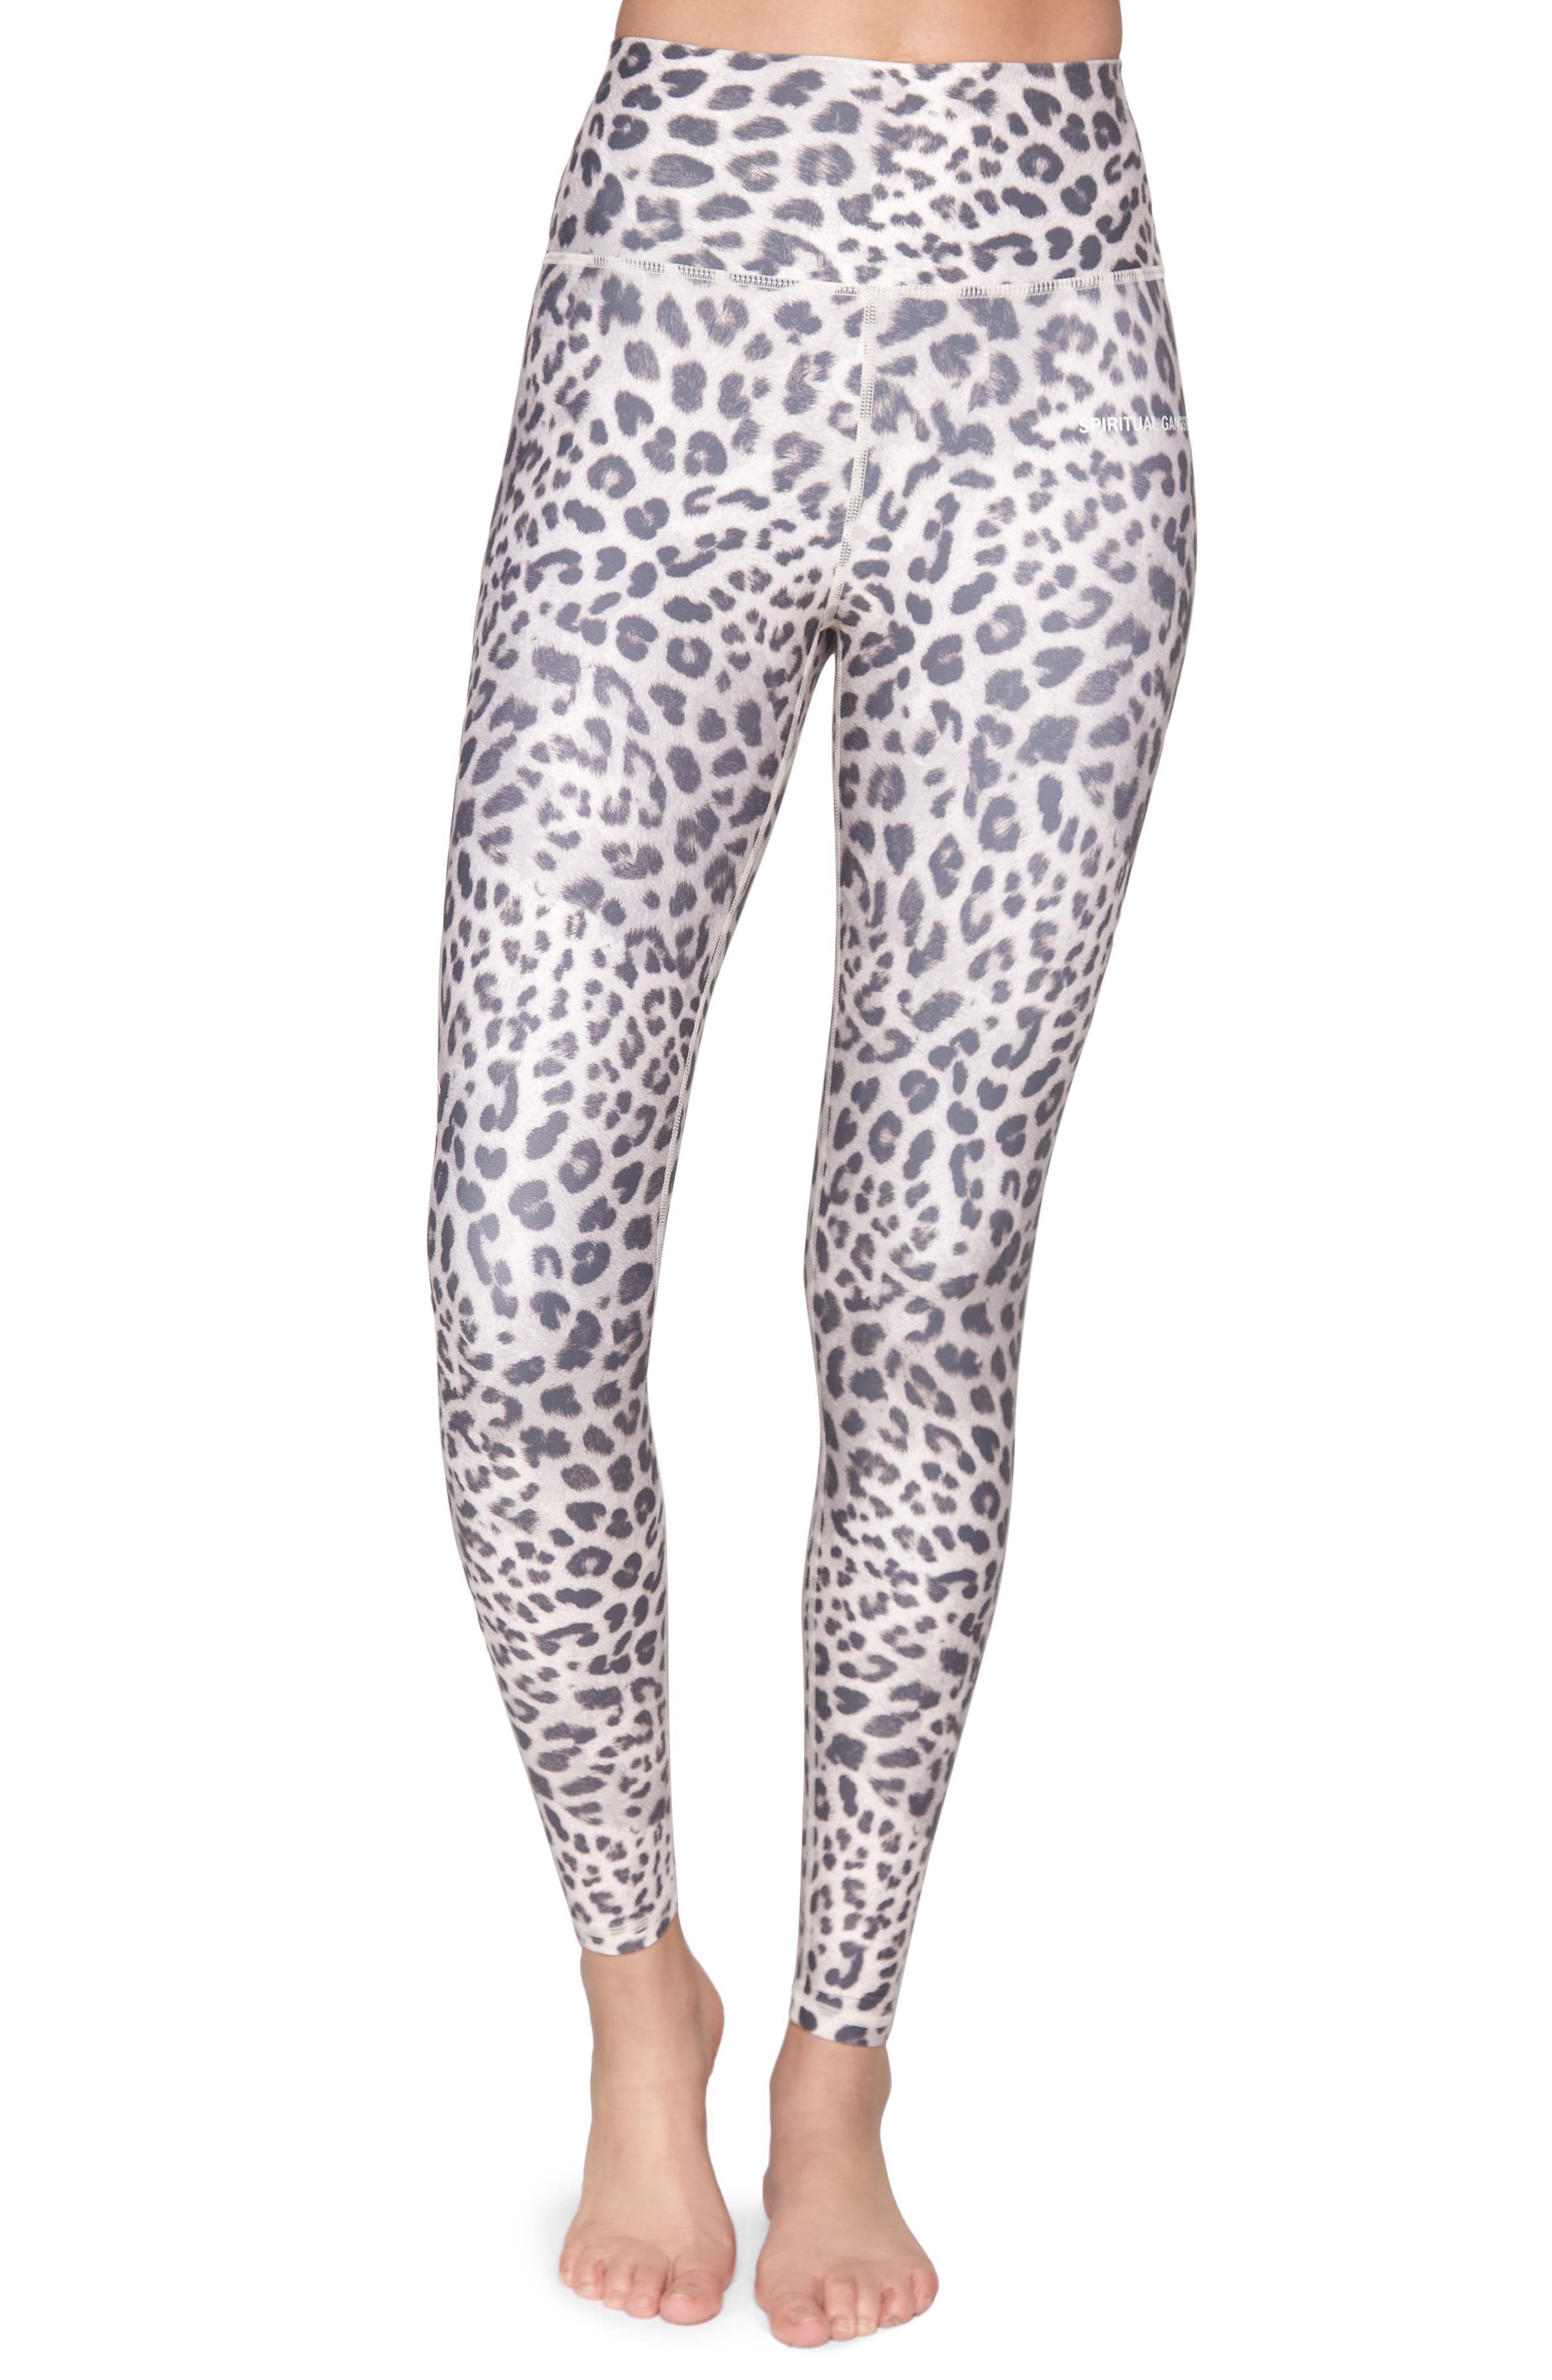 Ladies Women's  Girls Leopard leggings Printed Animal trousers Legging 8-26 